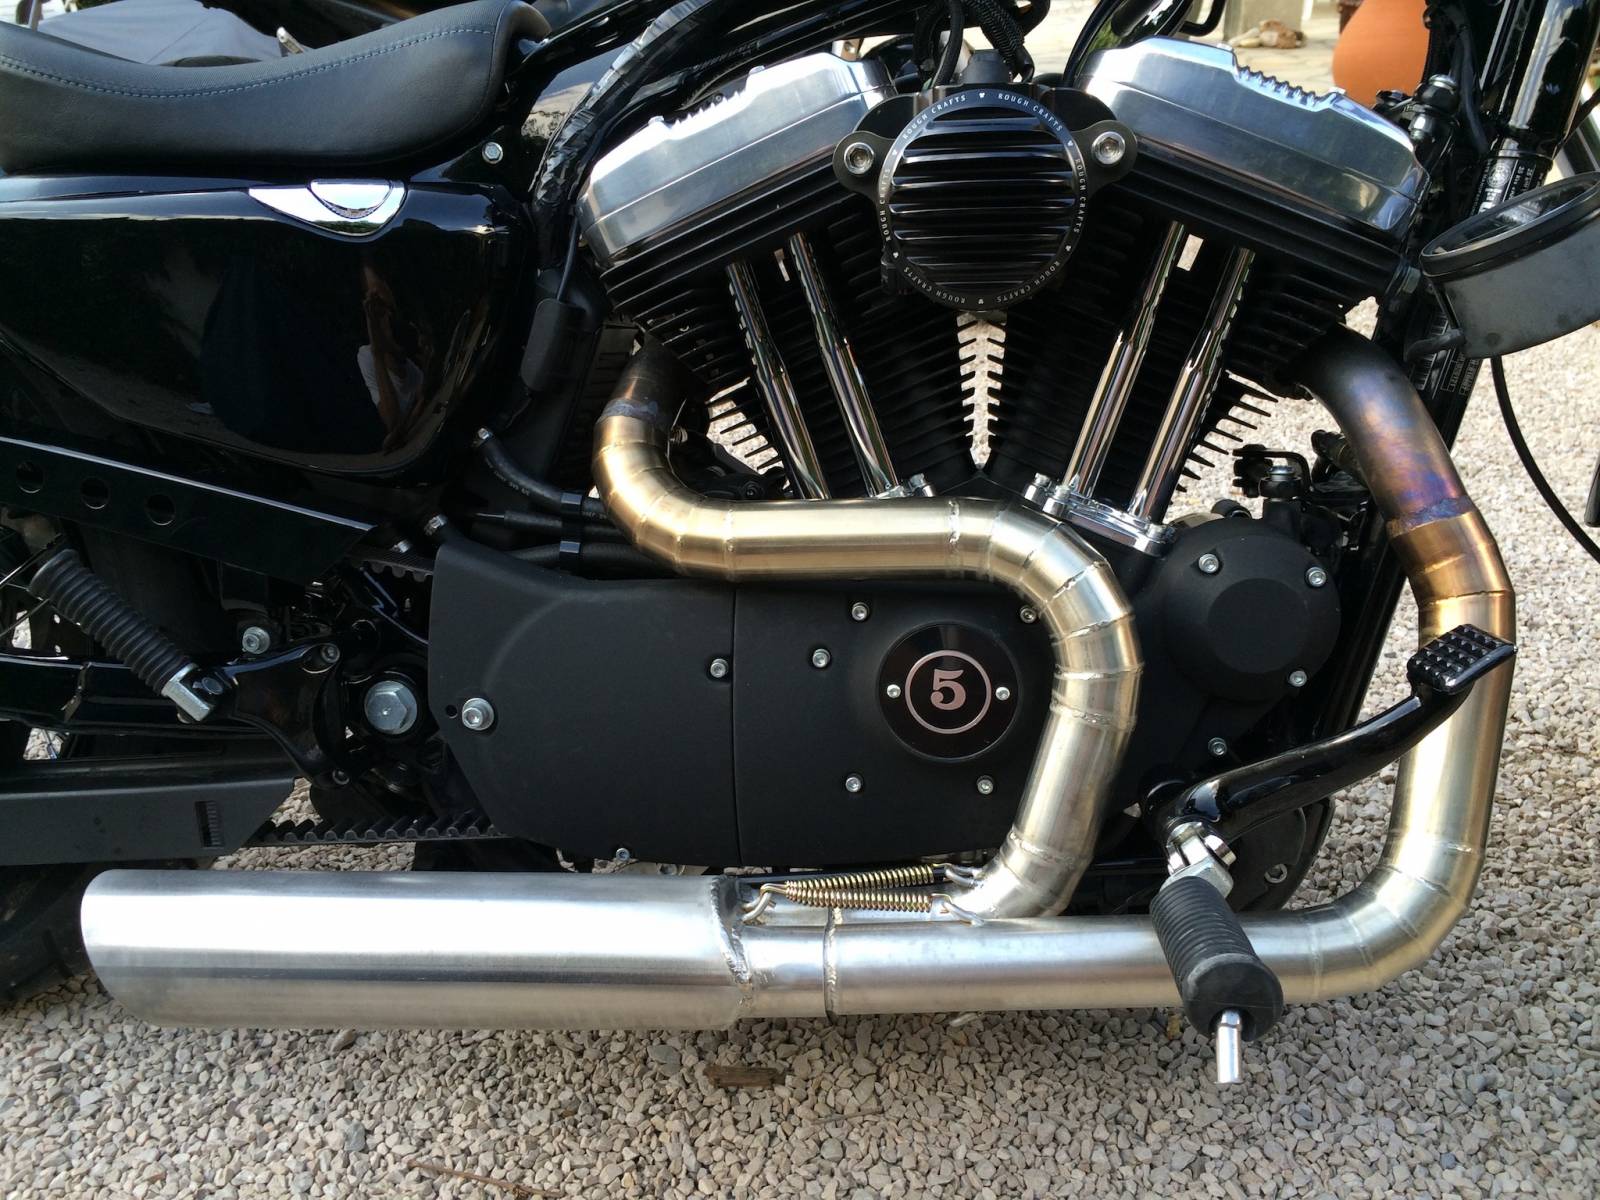 Changement des bougies d'allumage sur Harley-Davidson Sportster